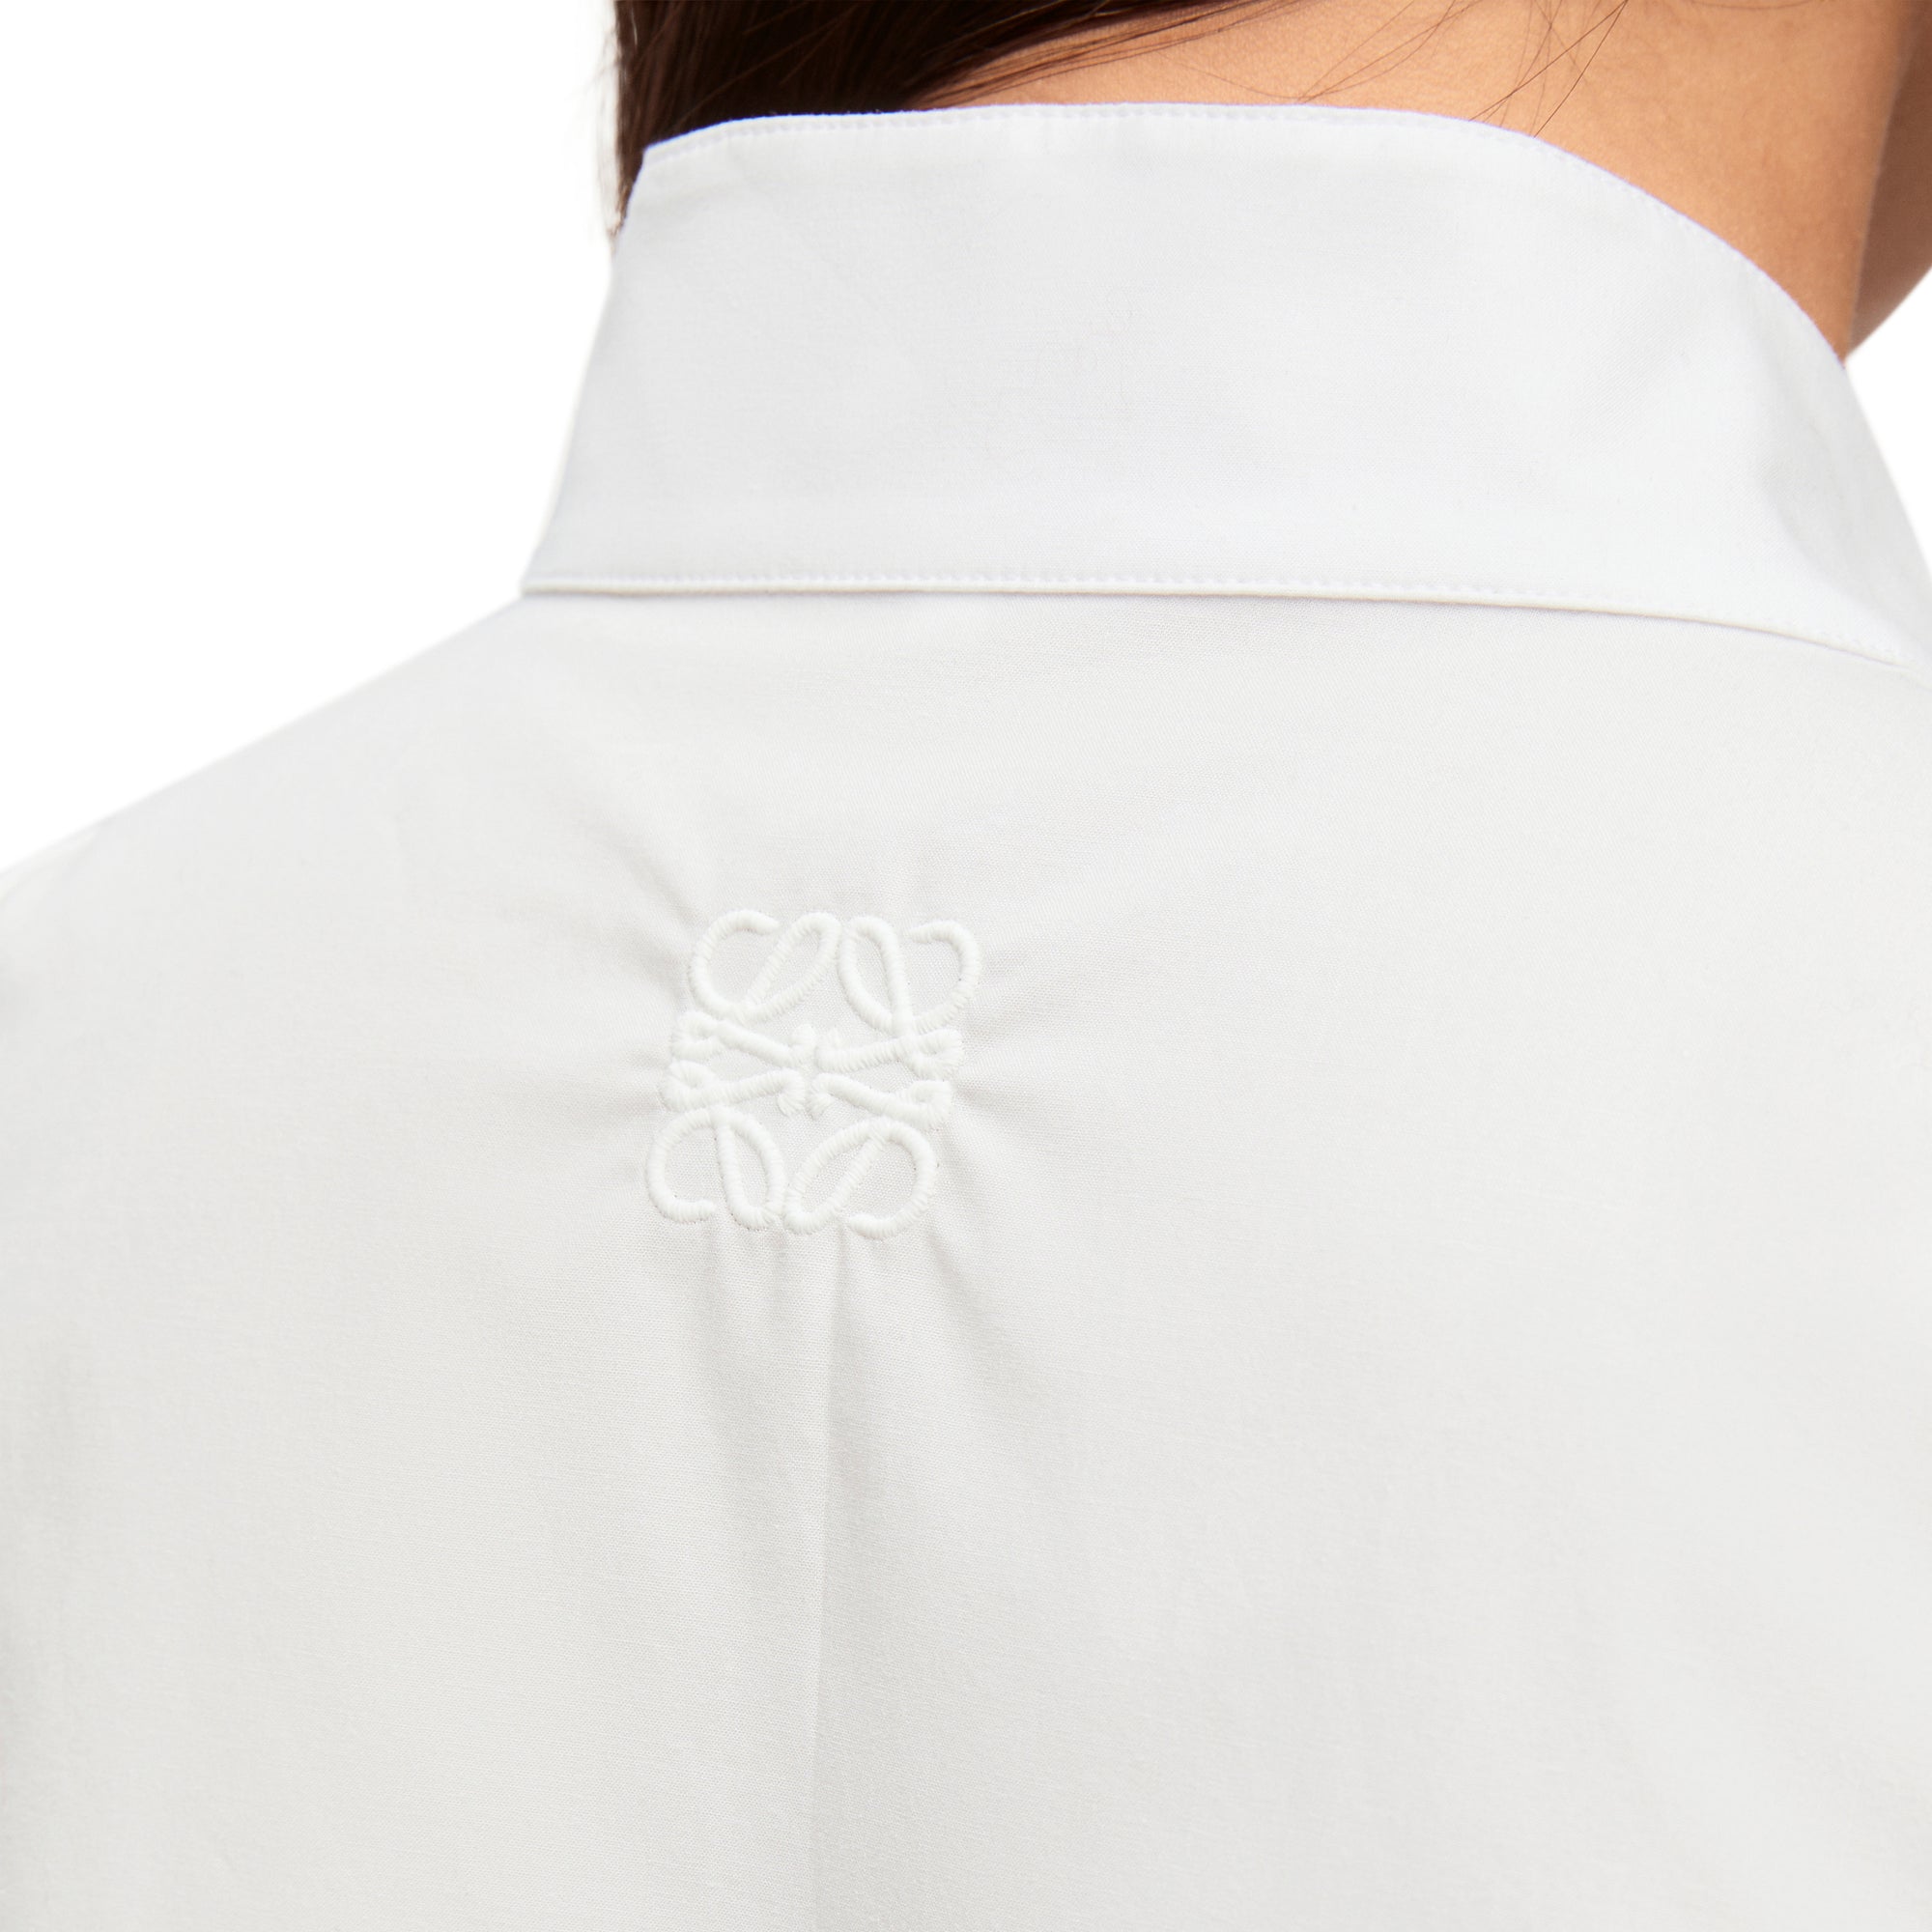 Loewe - Women’s Asymmetric Shirt - (White) view 6